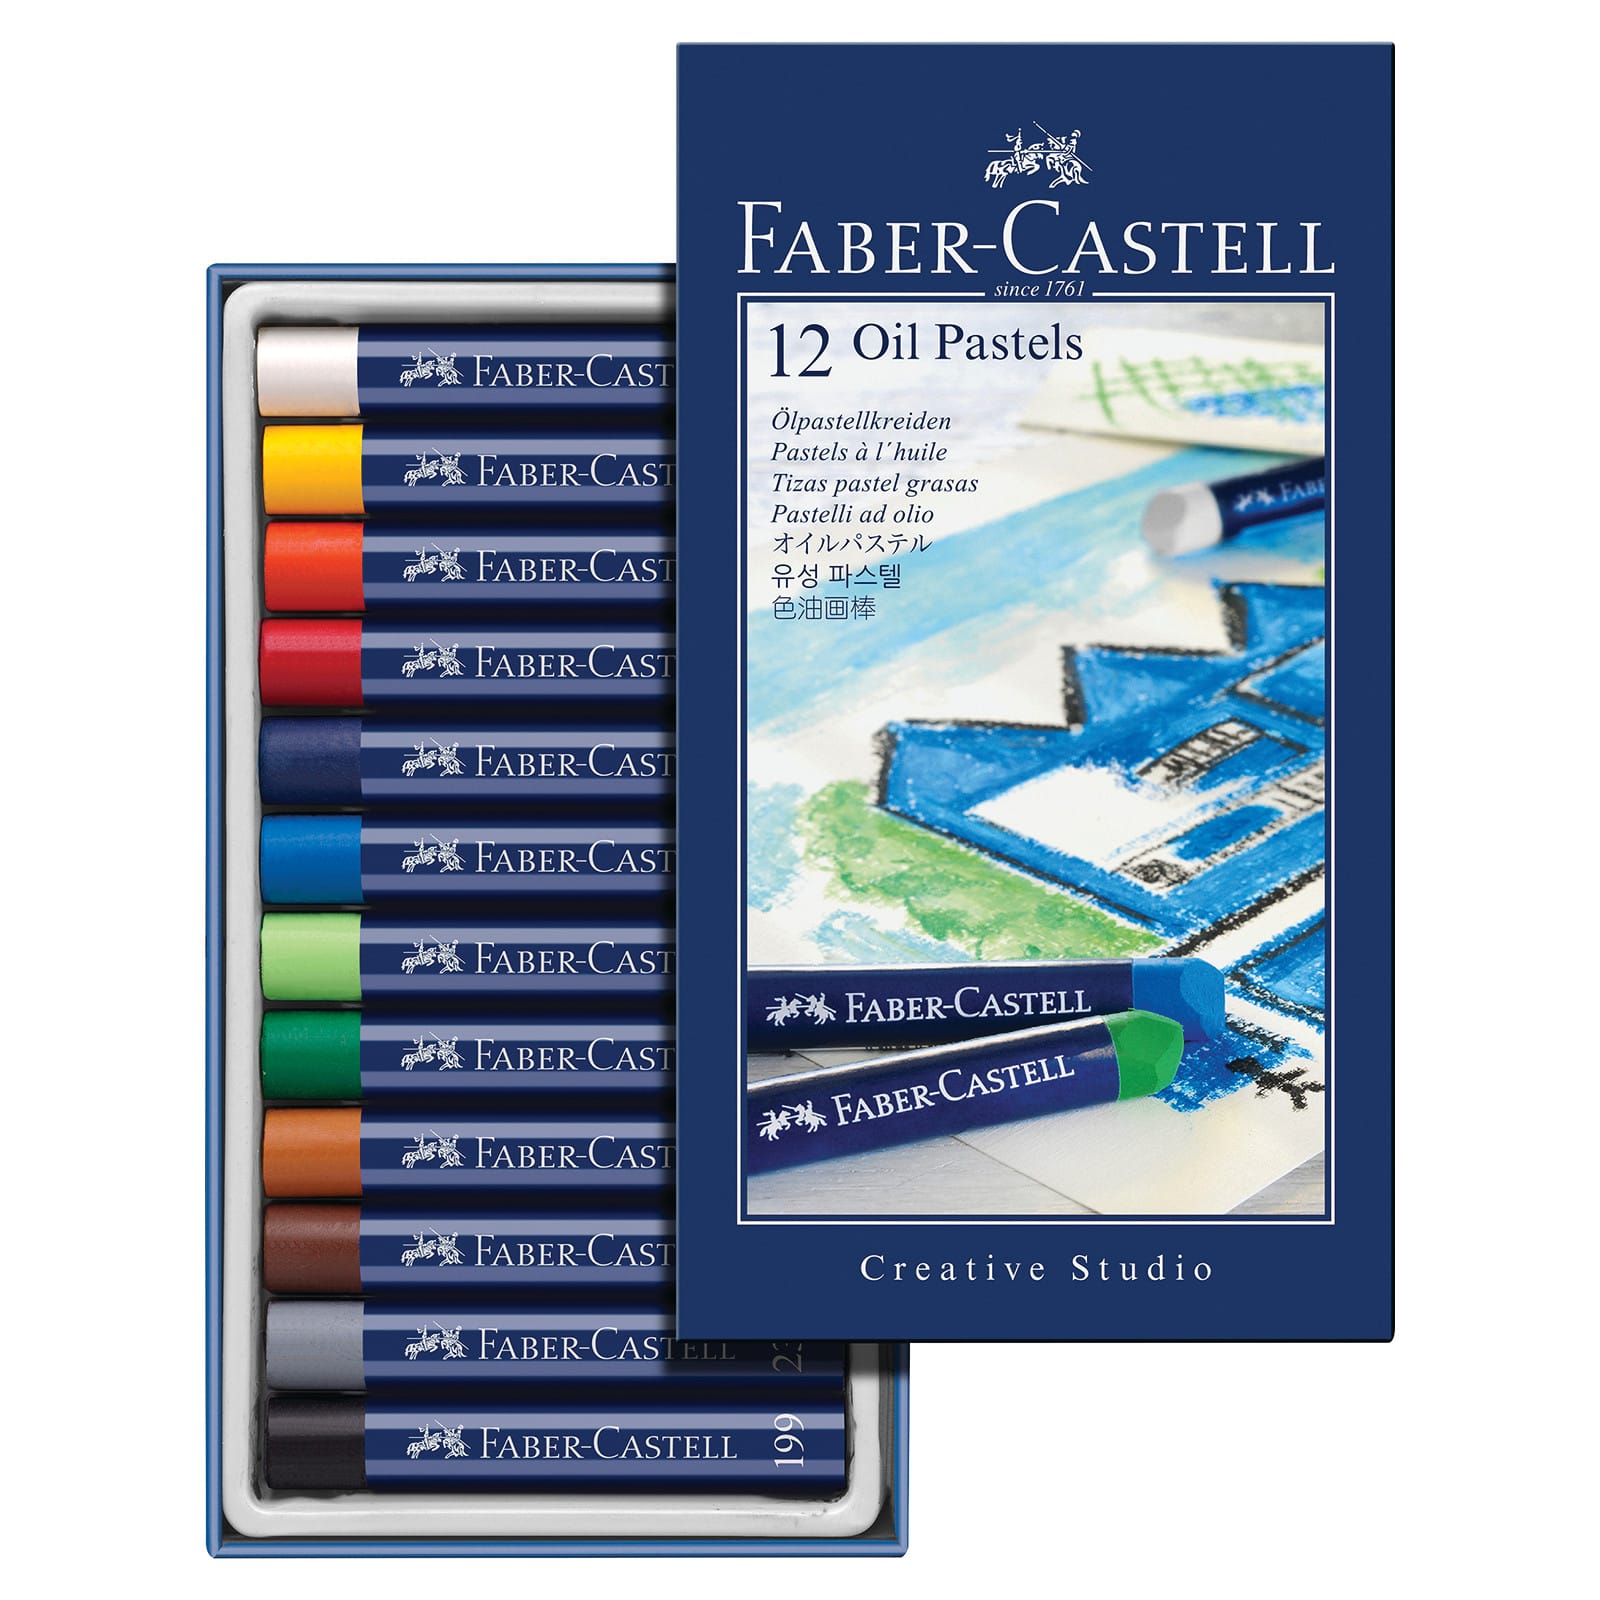 Oil Pastels: Faber-Castell Creative Studio Oil Pastels (review)